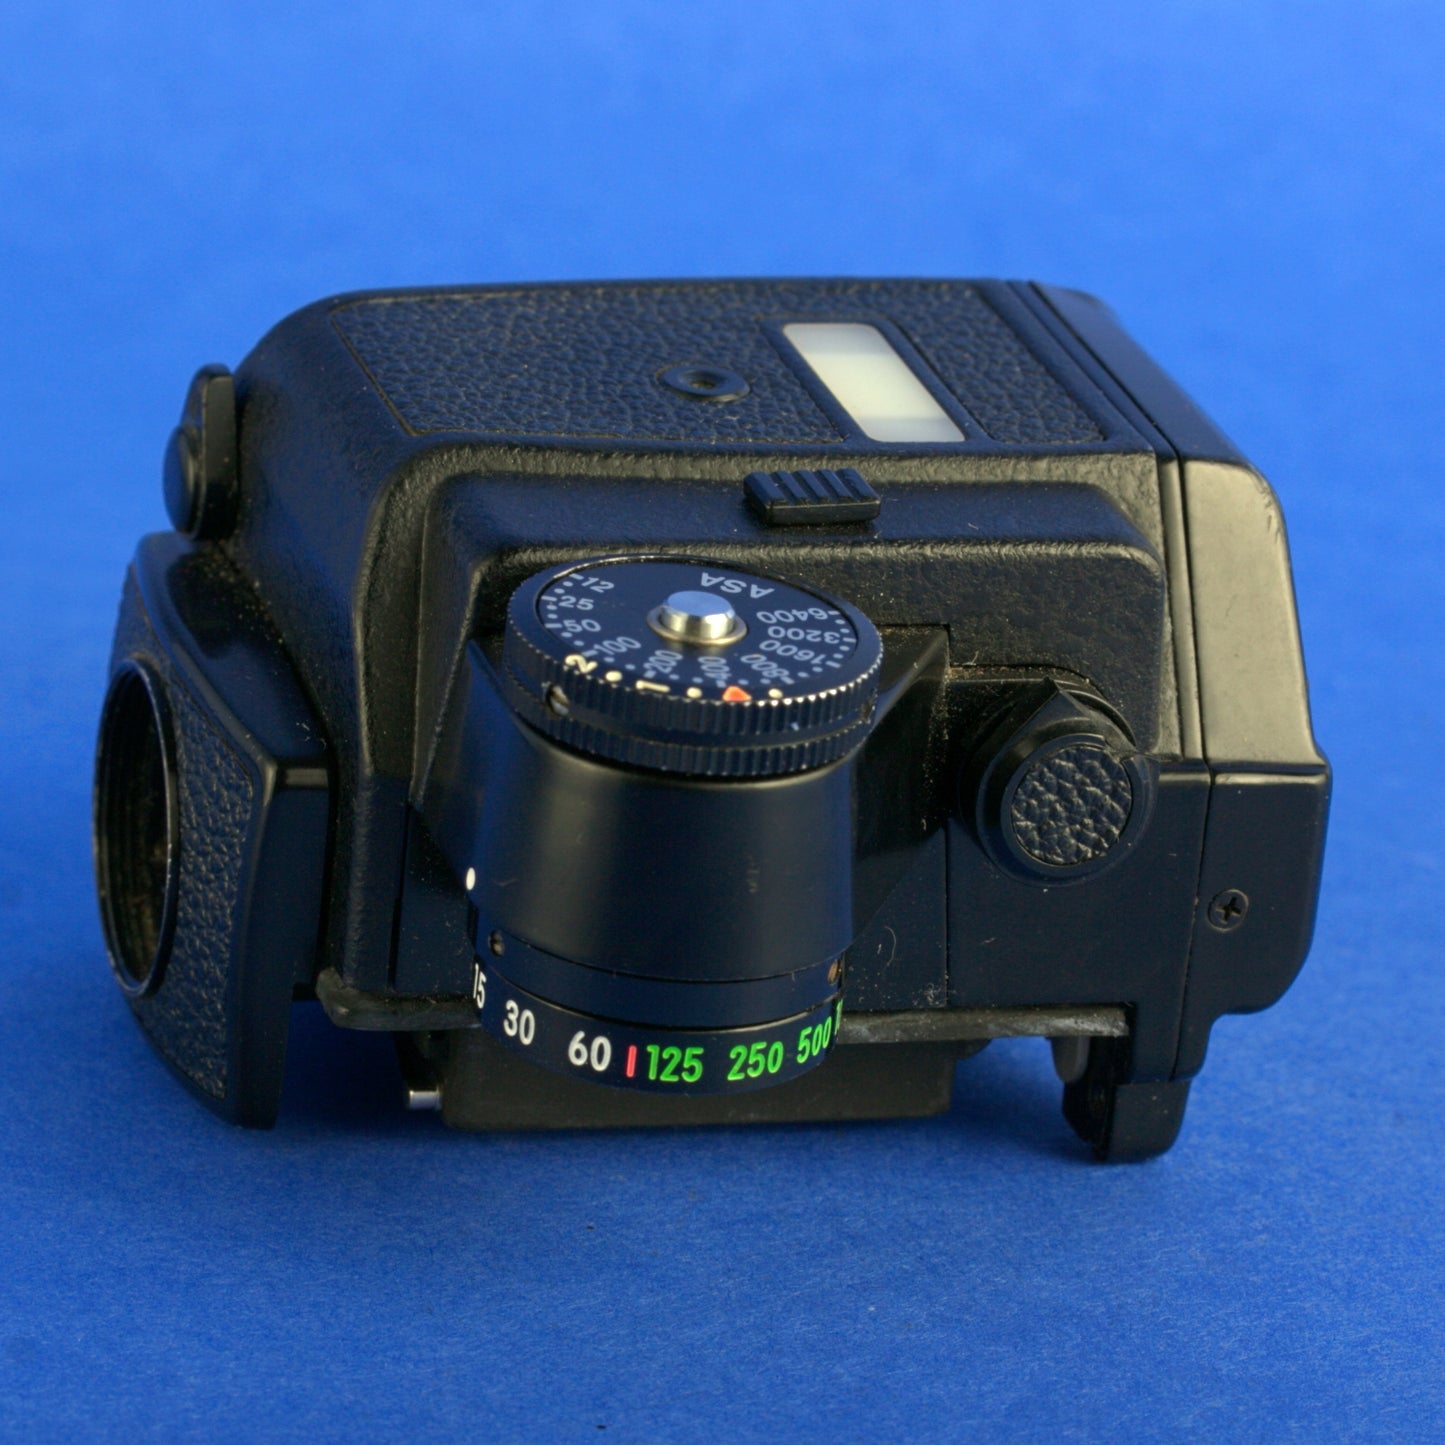 Nikon F2AS Film Camera Body